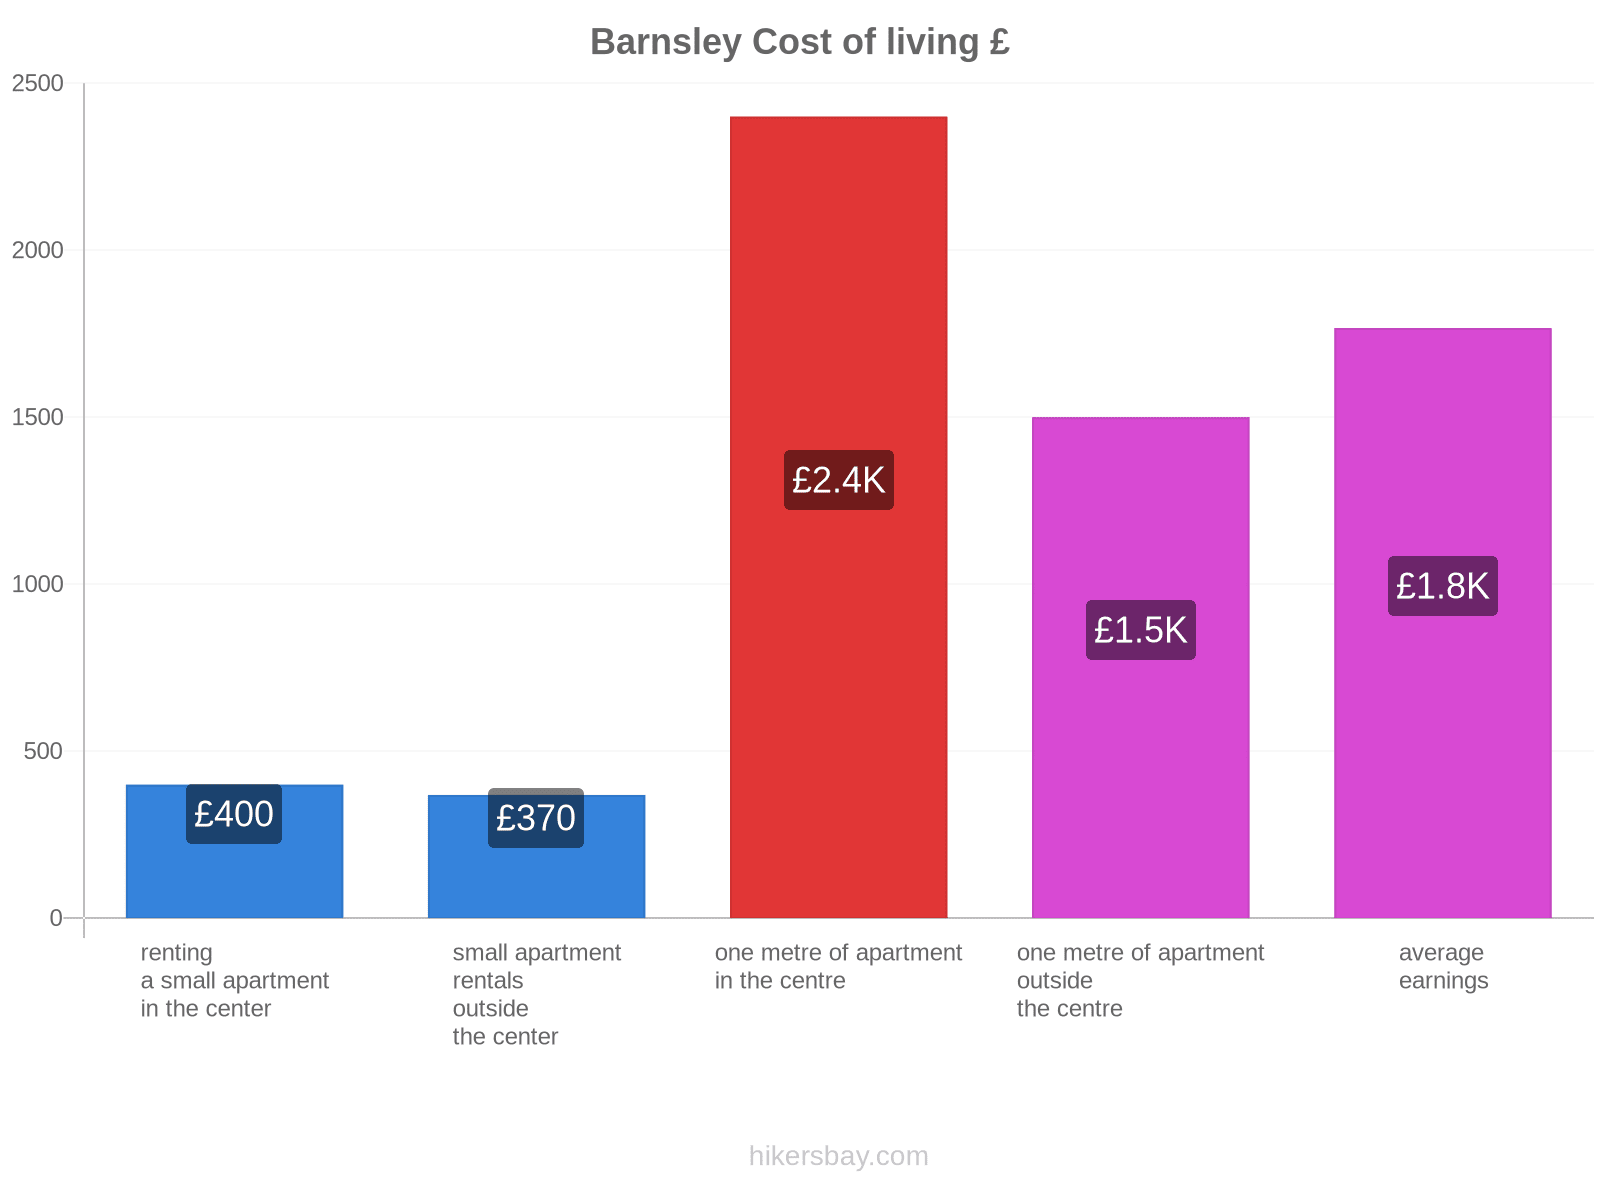 Barnsley cost of living hikersbay.com